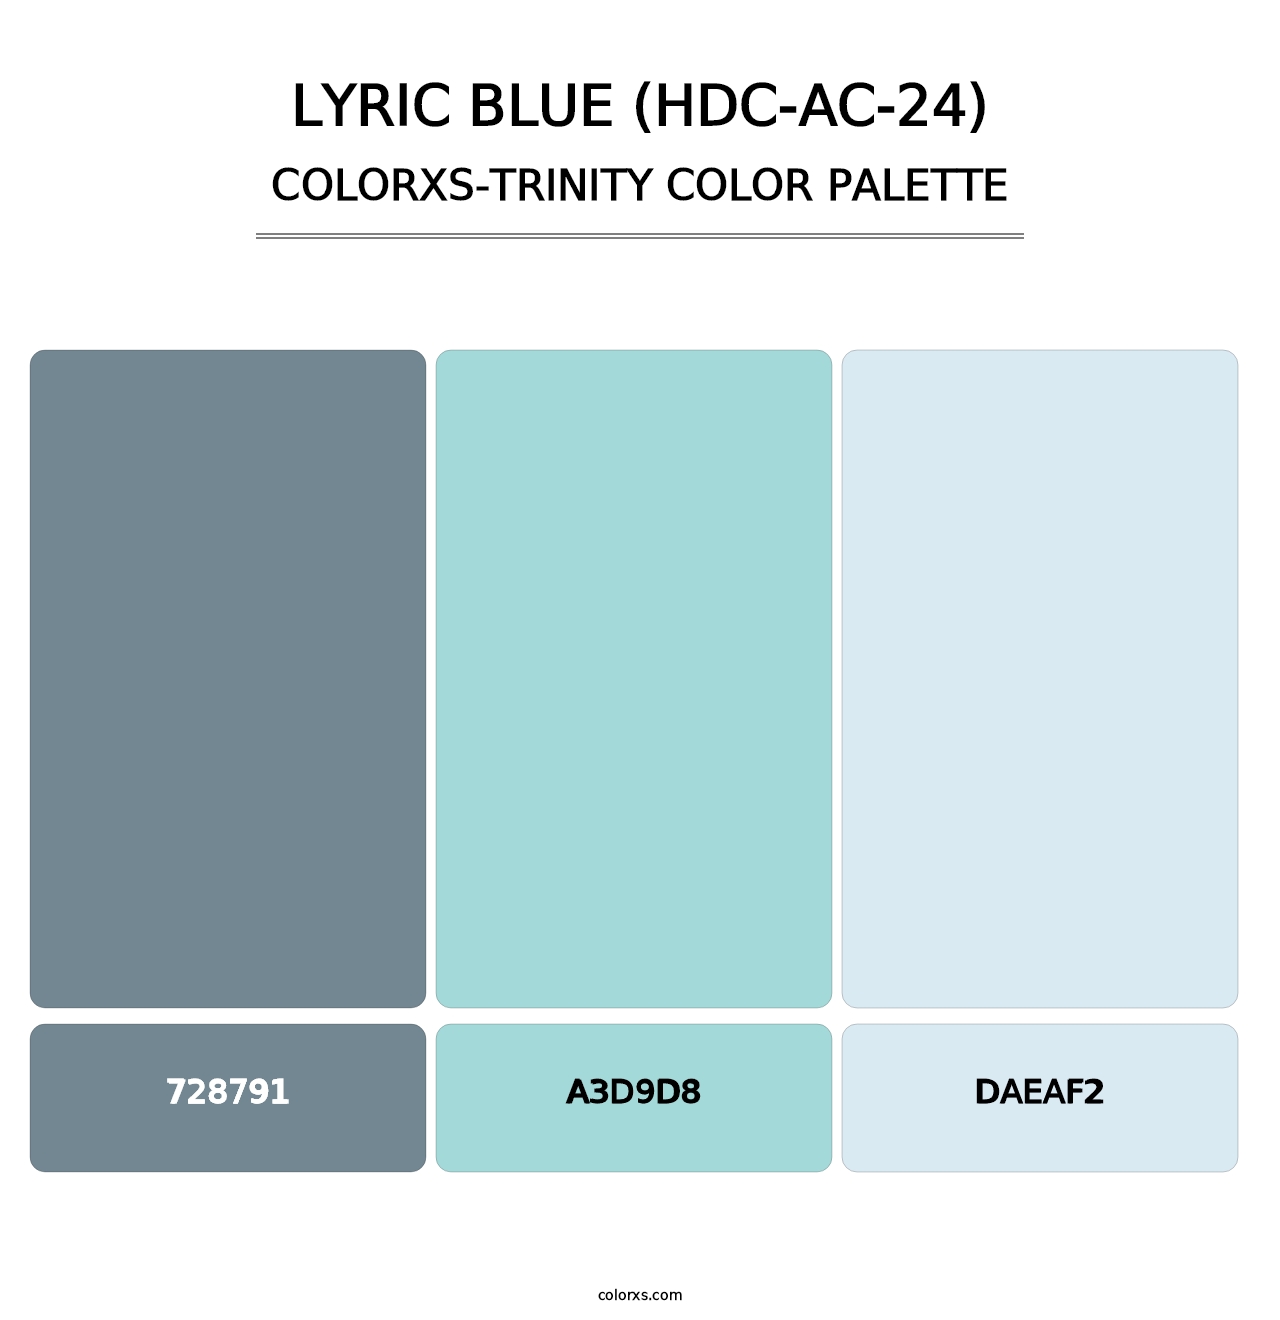 Lyric Blue (HDC-AC-24) - Colorxs Trinity Palette